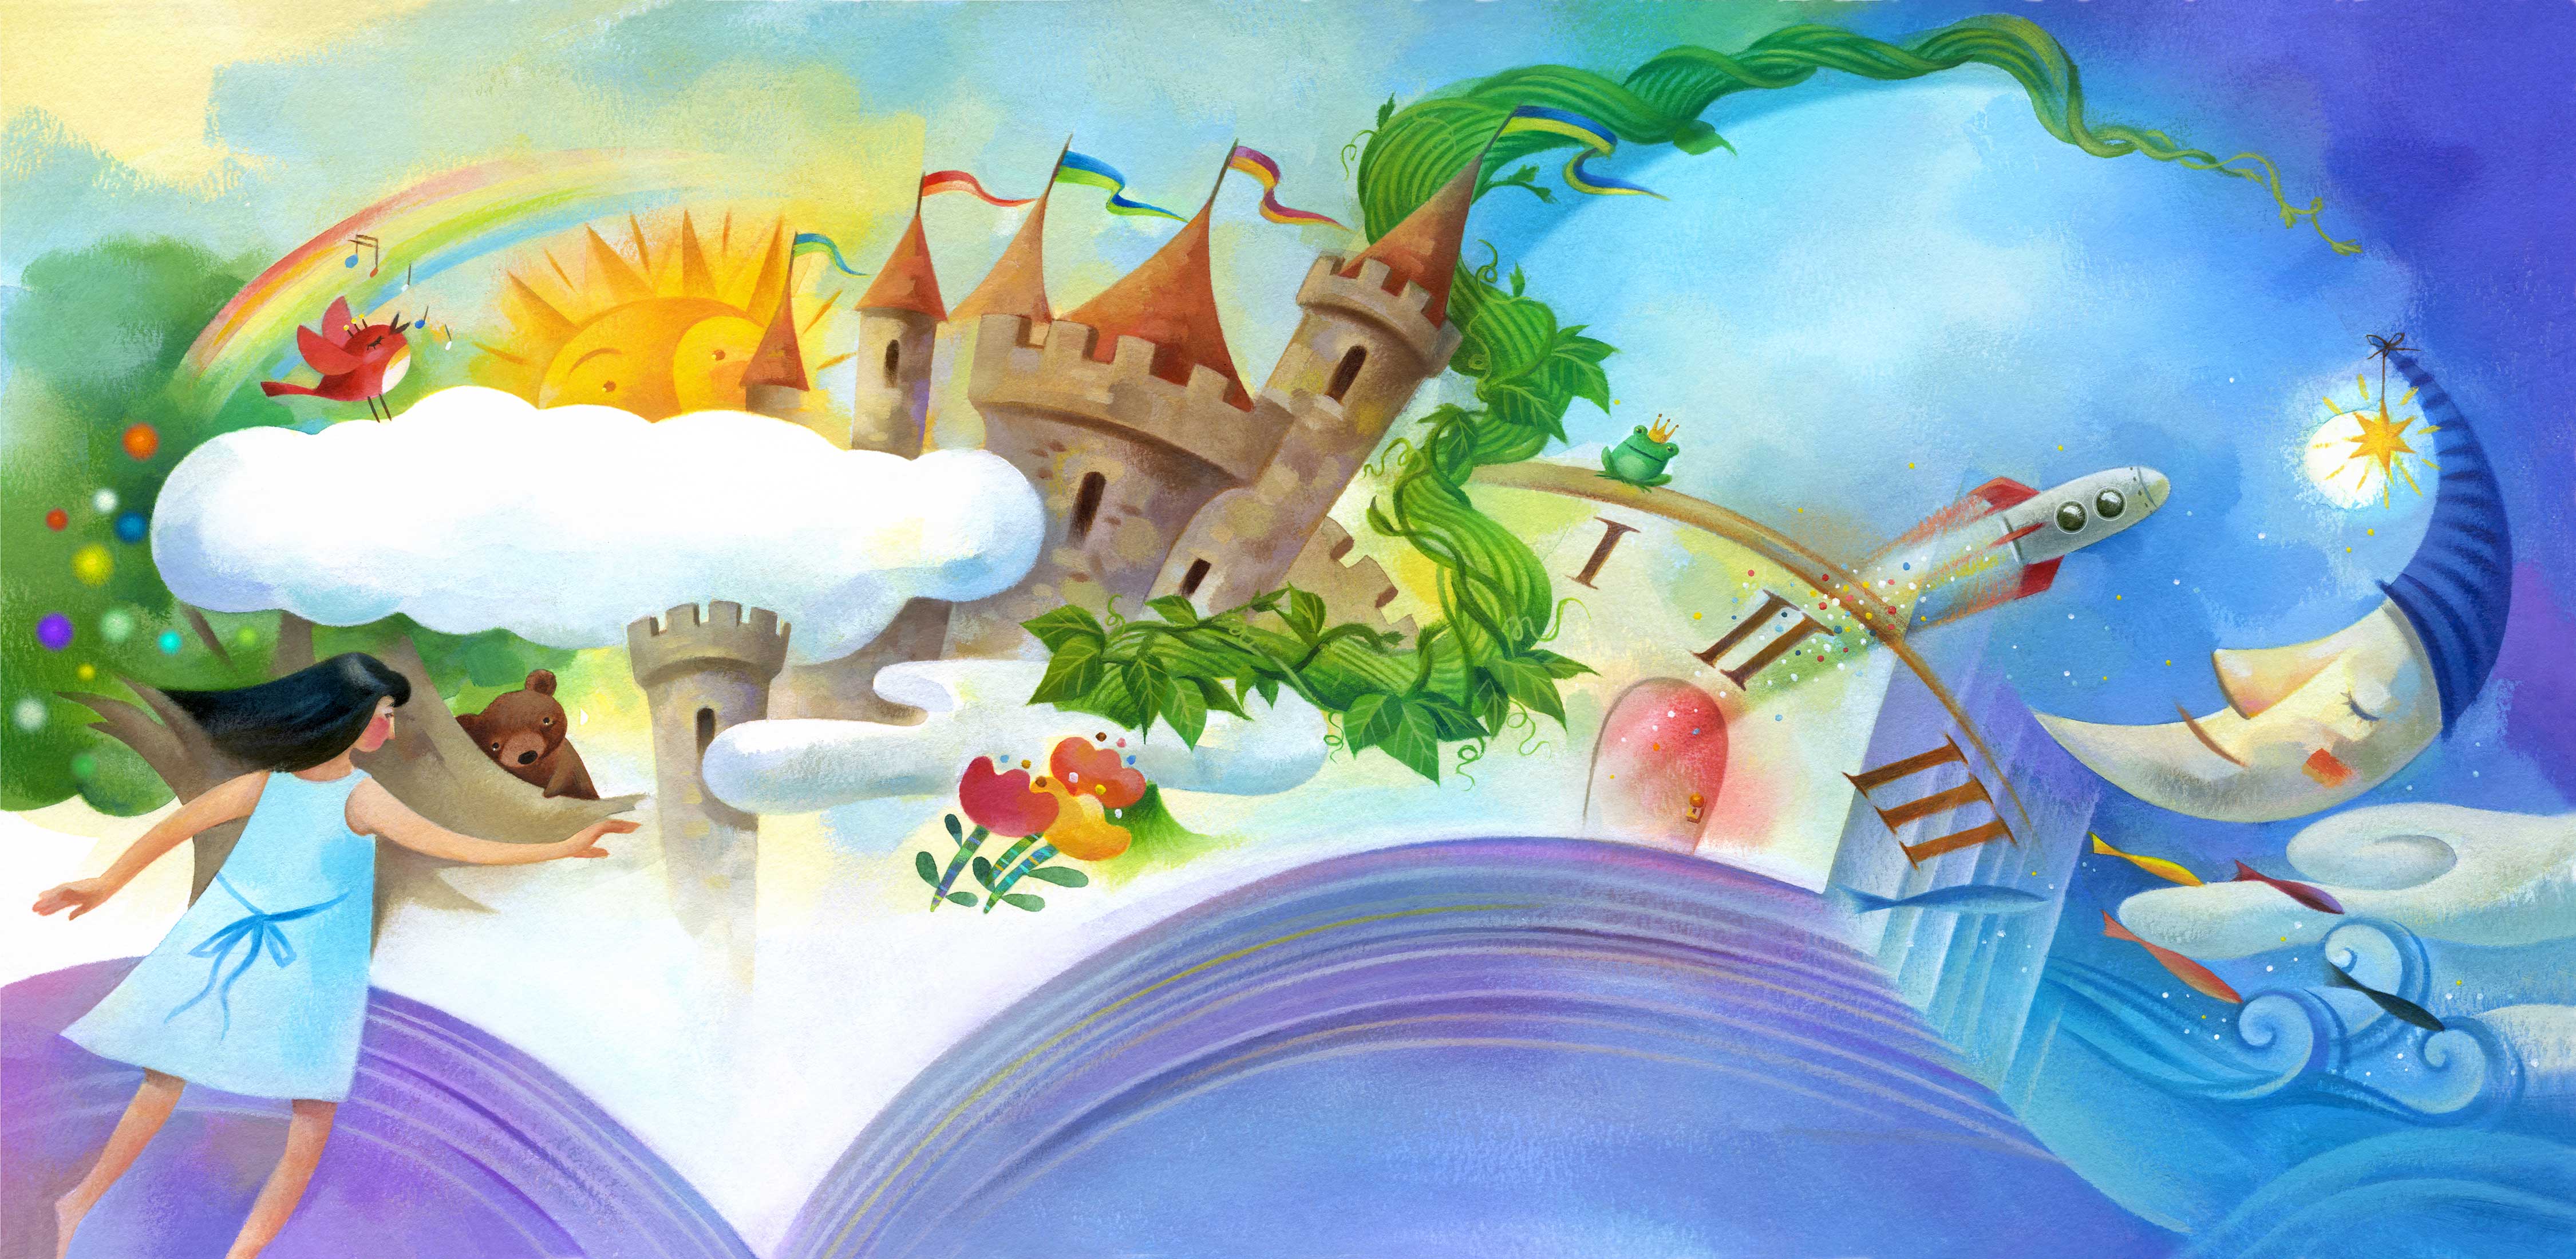 Jui Ishida Illustration fairy tale castle in story book